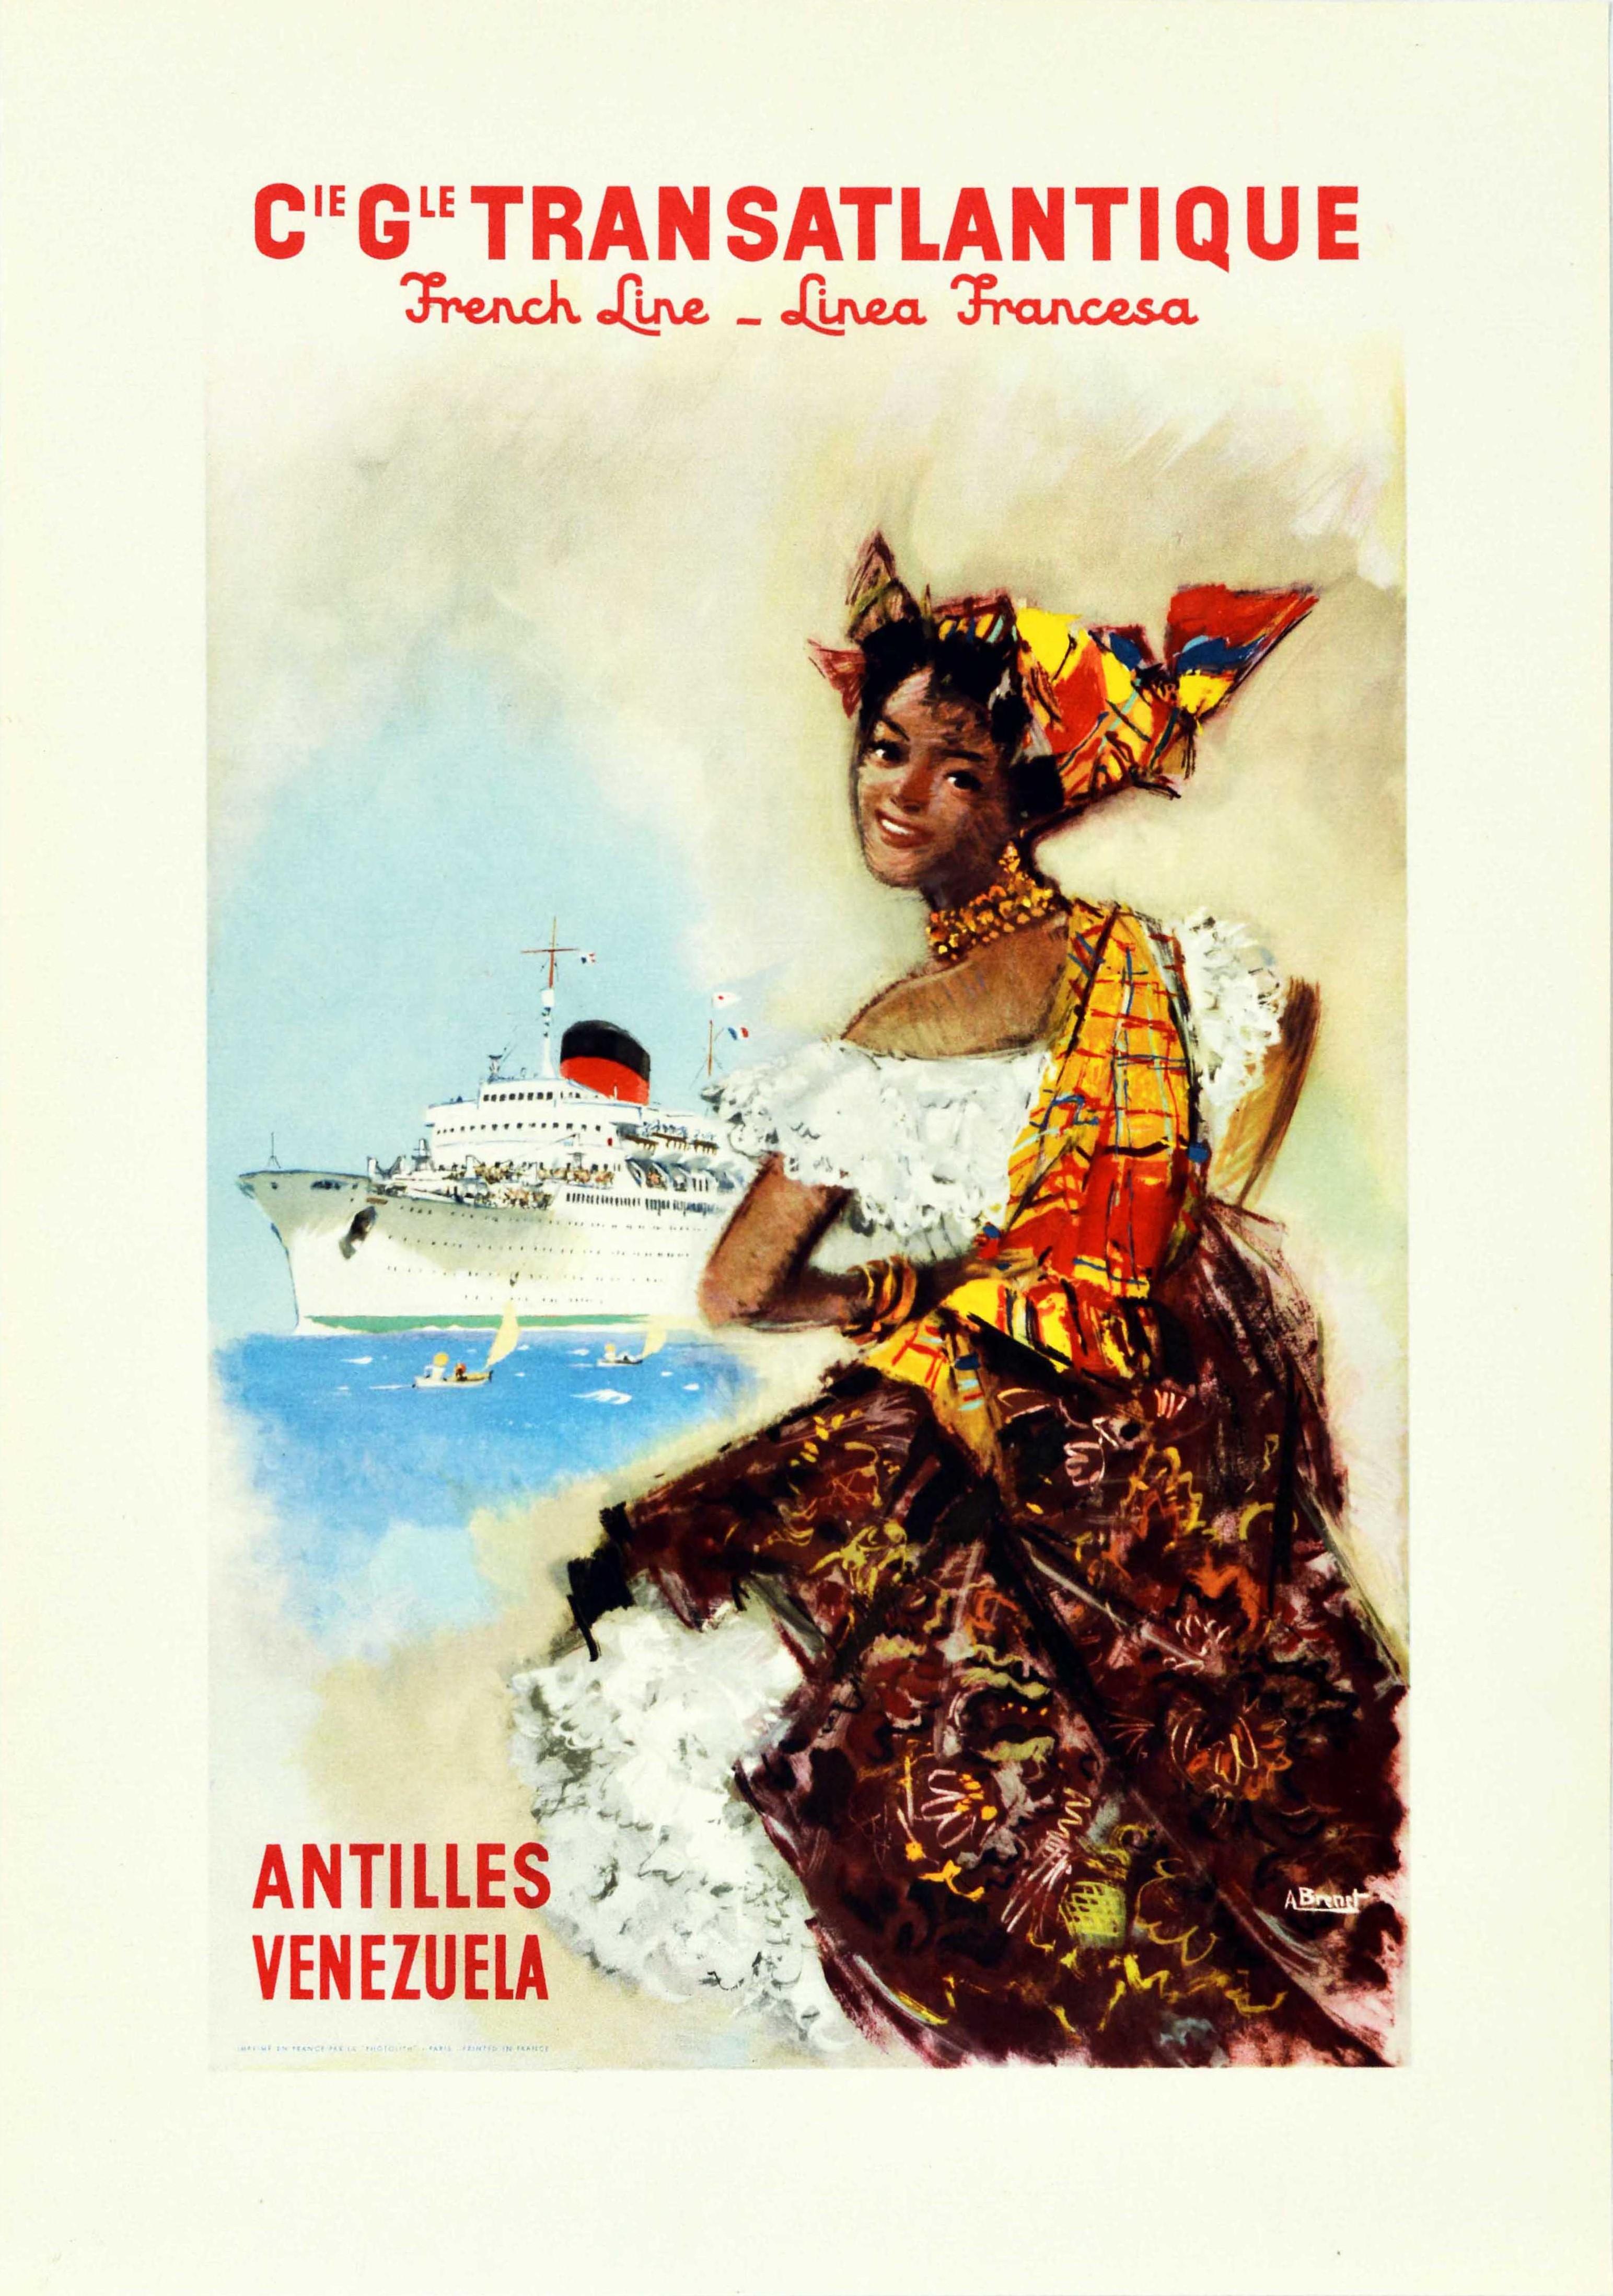 Albert Brenet Print - Original Vintage Travel Poster Transatlantique French Line Antilles Venezuela